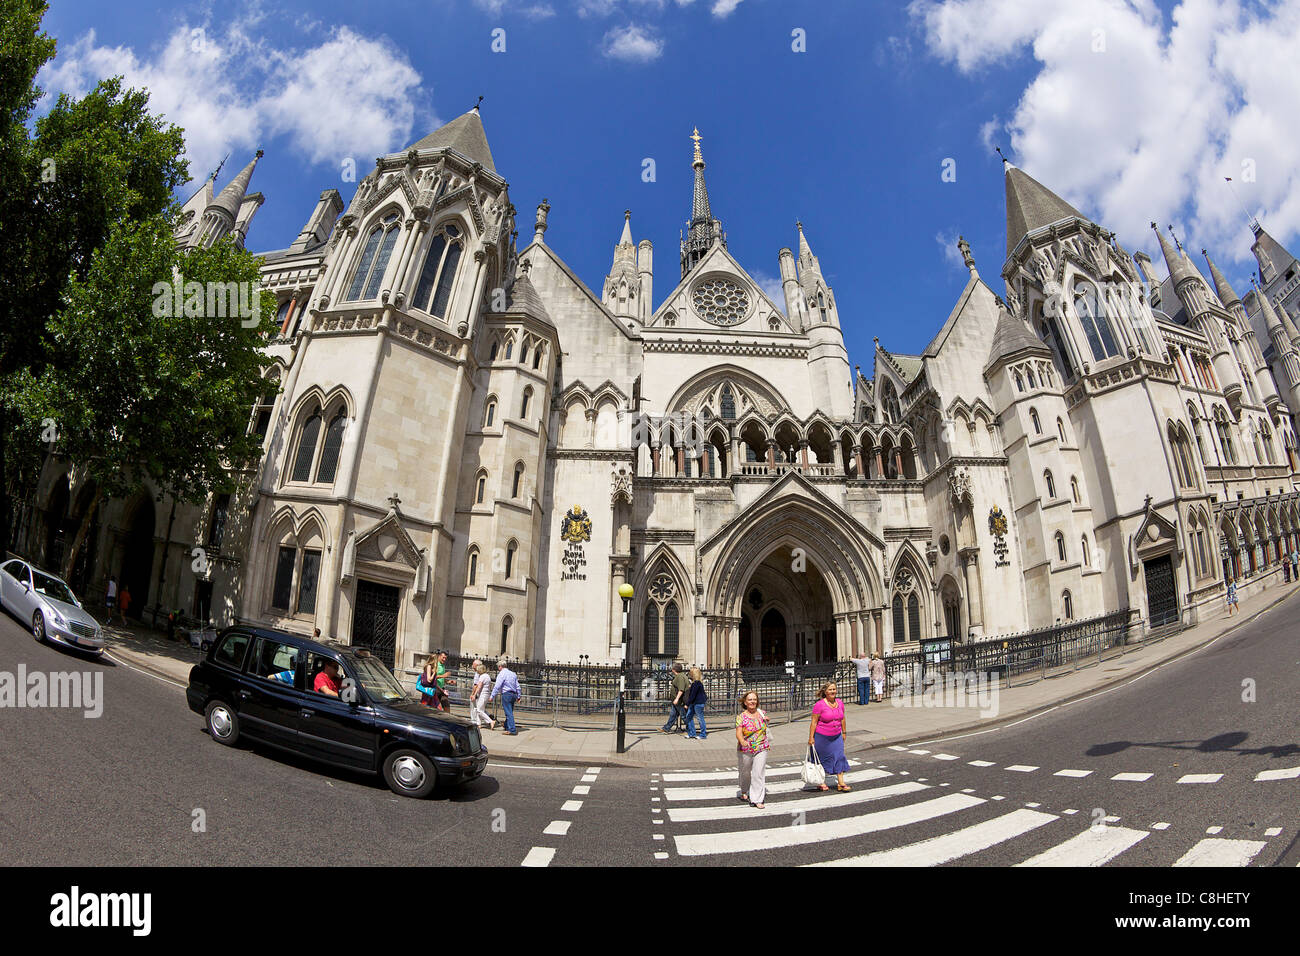 Royal Courts of Justice, City of London, England, UK, Royaume-Uni, GO, Grande-Bretagne, British Isles, Europe Banque D'Images